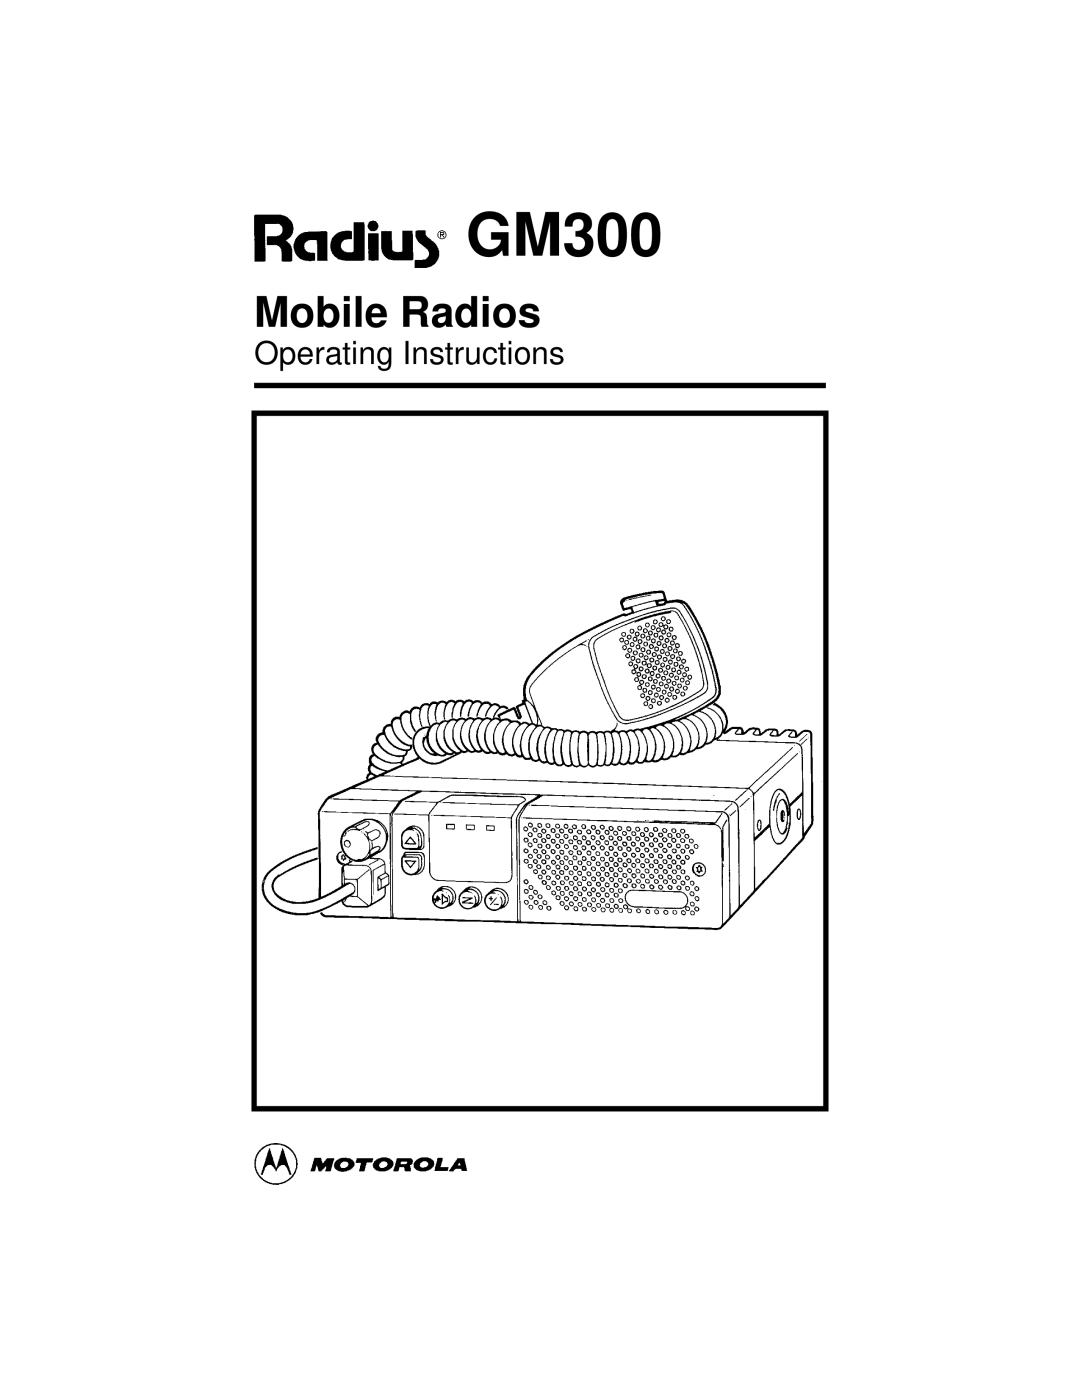 Motorola GM300 operating instructions Mobile Radios, Operating Instructions 